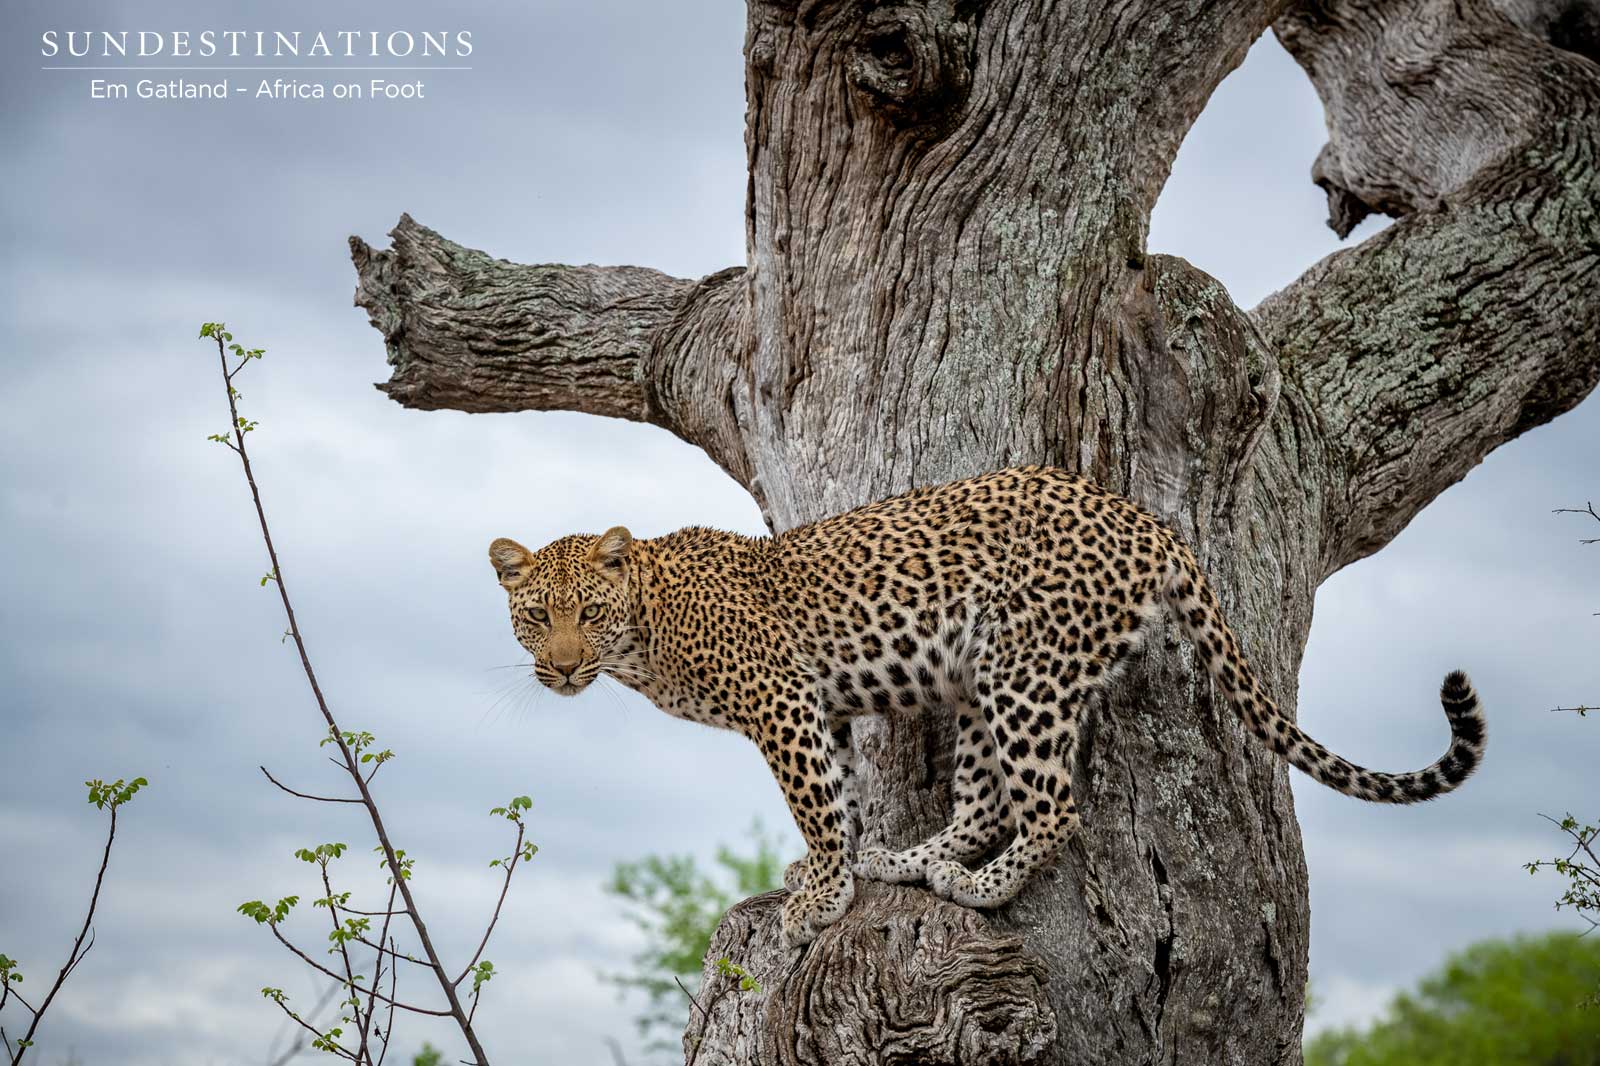 Nyeleti Africa on Foot Tree